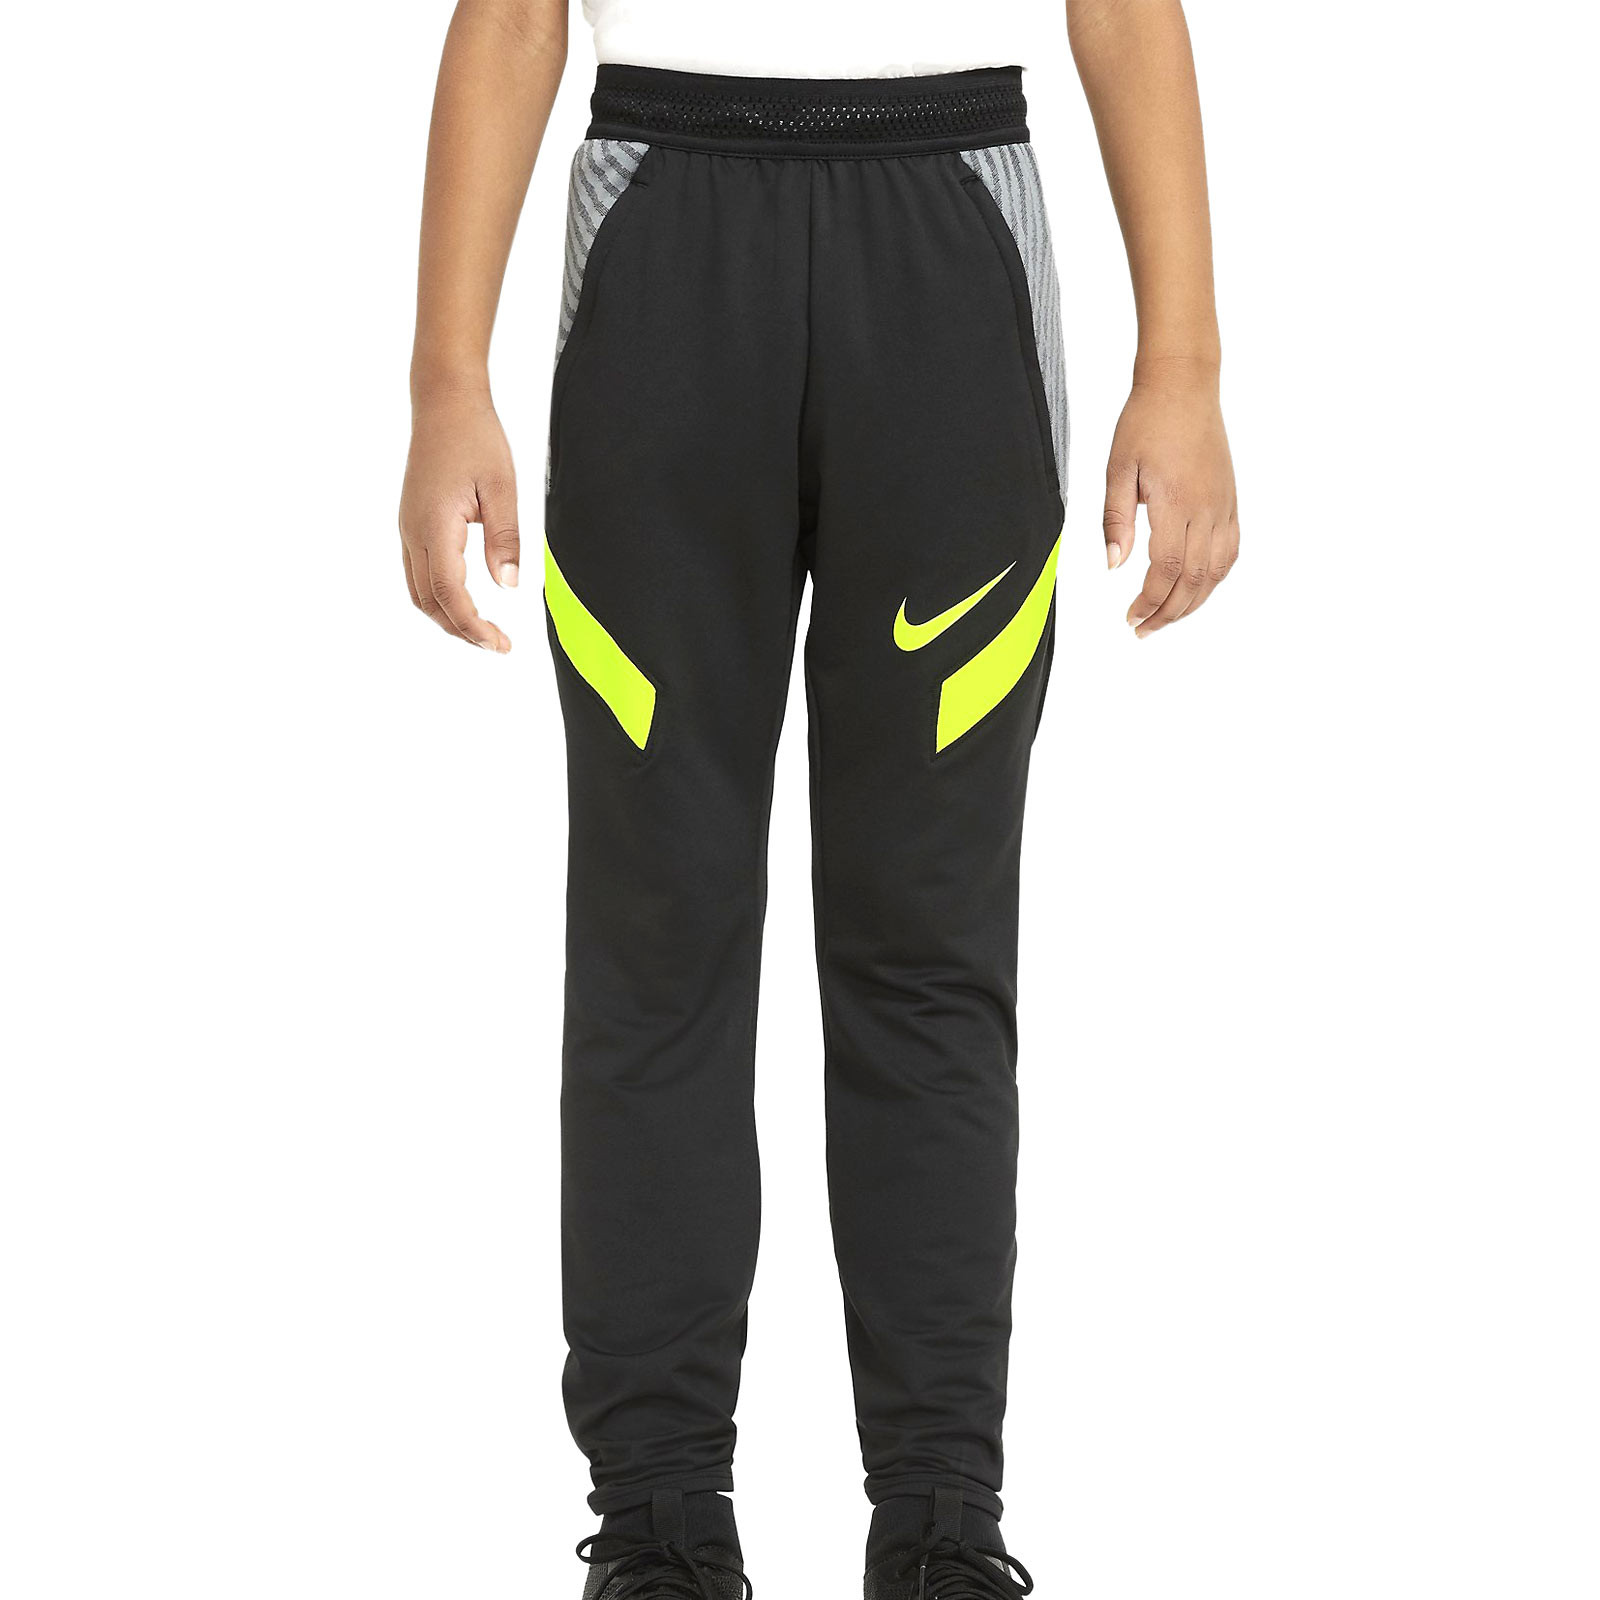 Aclarar Línea de visión Anuncio Pantalón Nike niño Dry Strike negro amarillo | futbolmaniaKids